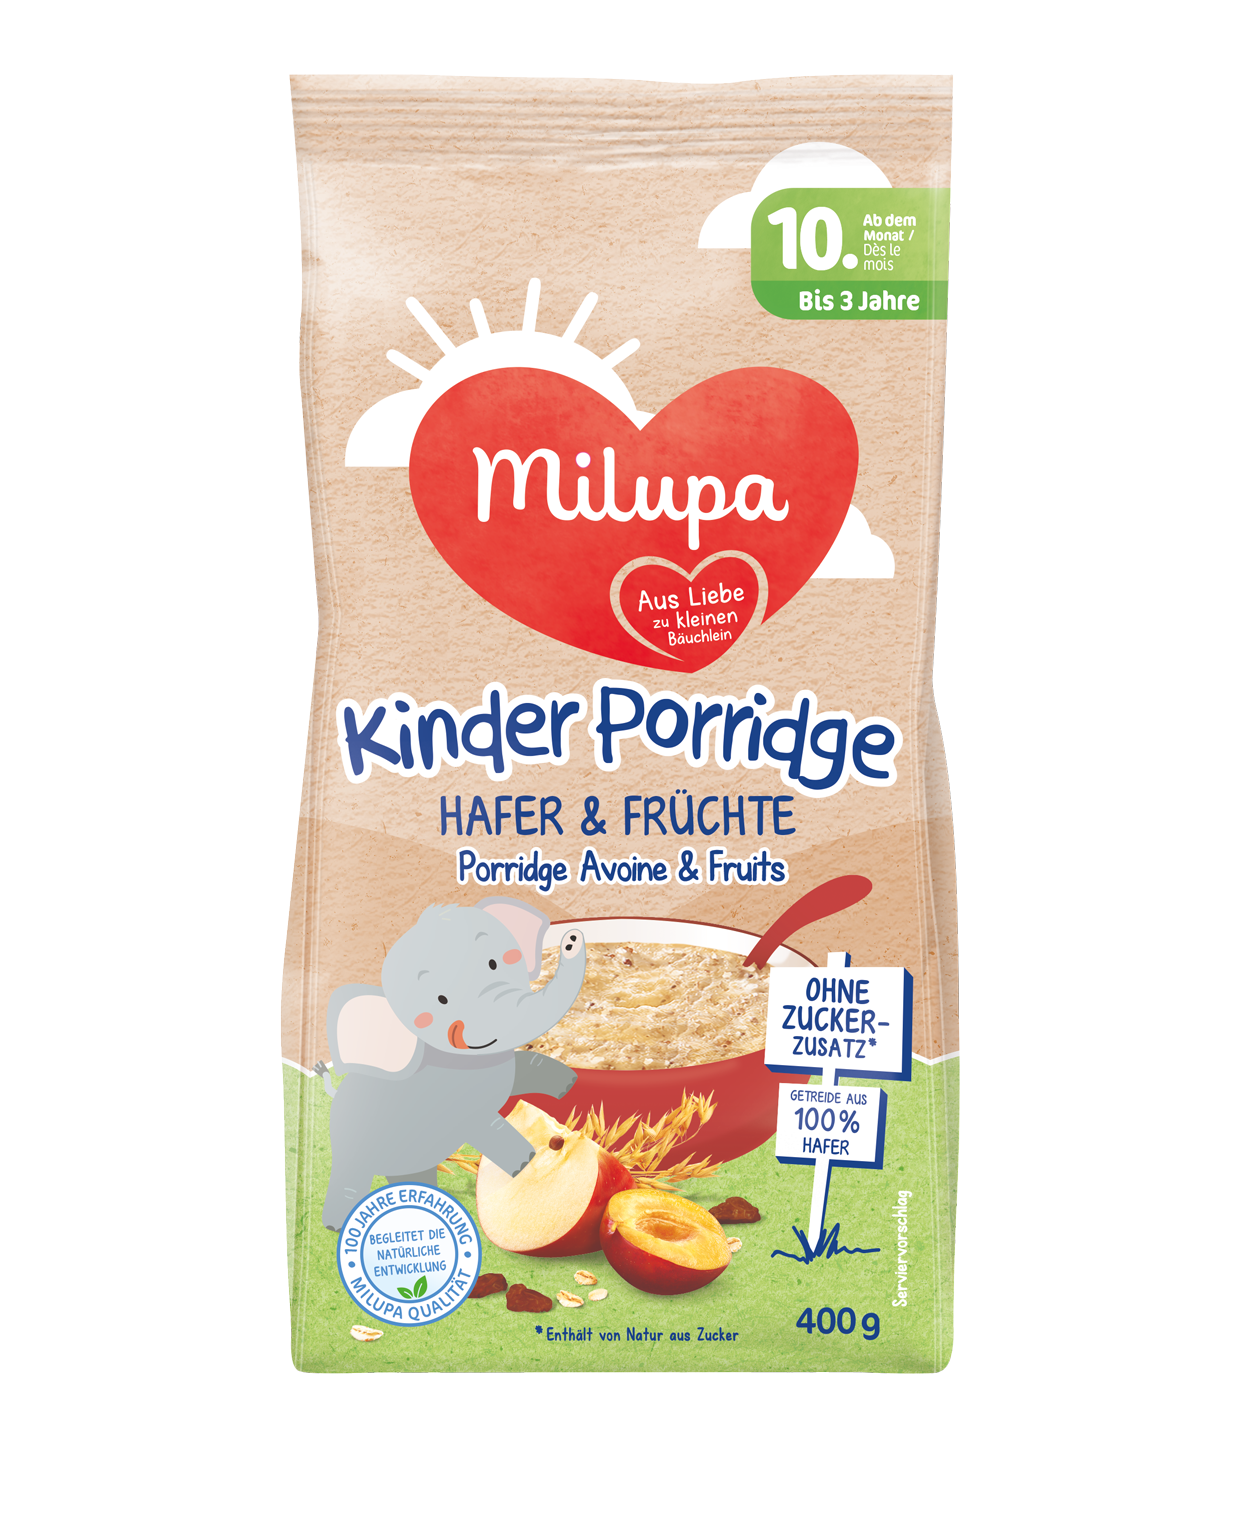 Milupa Kinder Porridge Hafer & Früchte